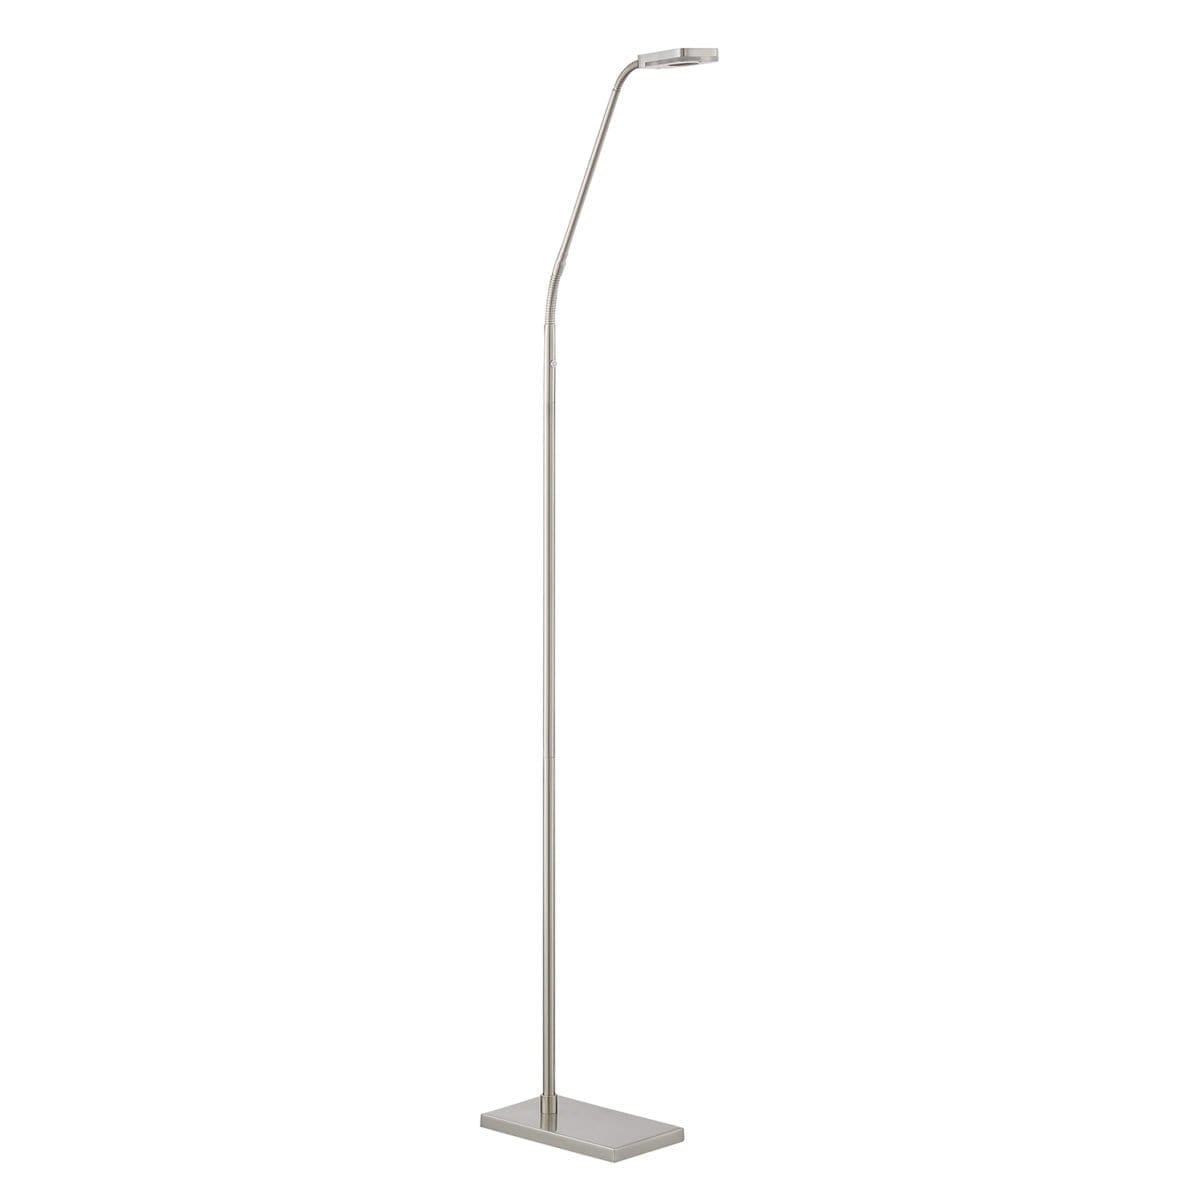 148 FL4094 SN
LED Floor Lamp
Regular Price $159.99
Sale Price $111.99